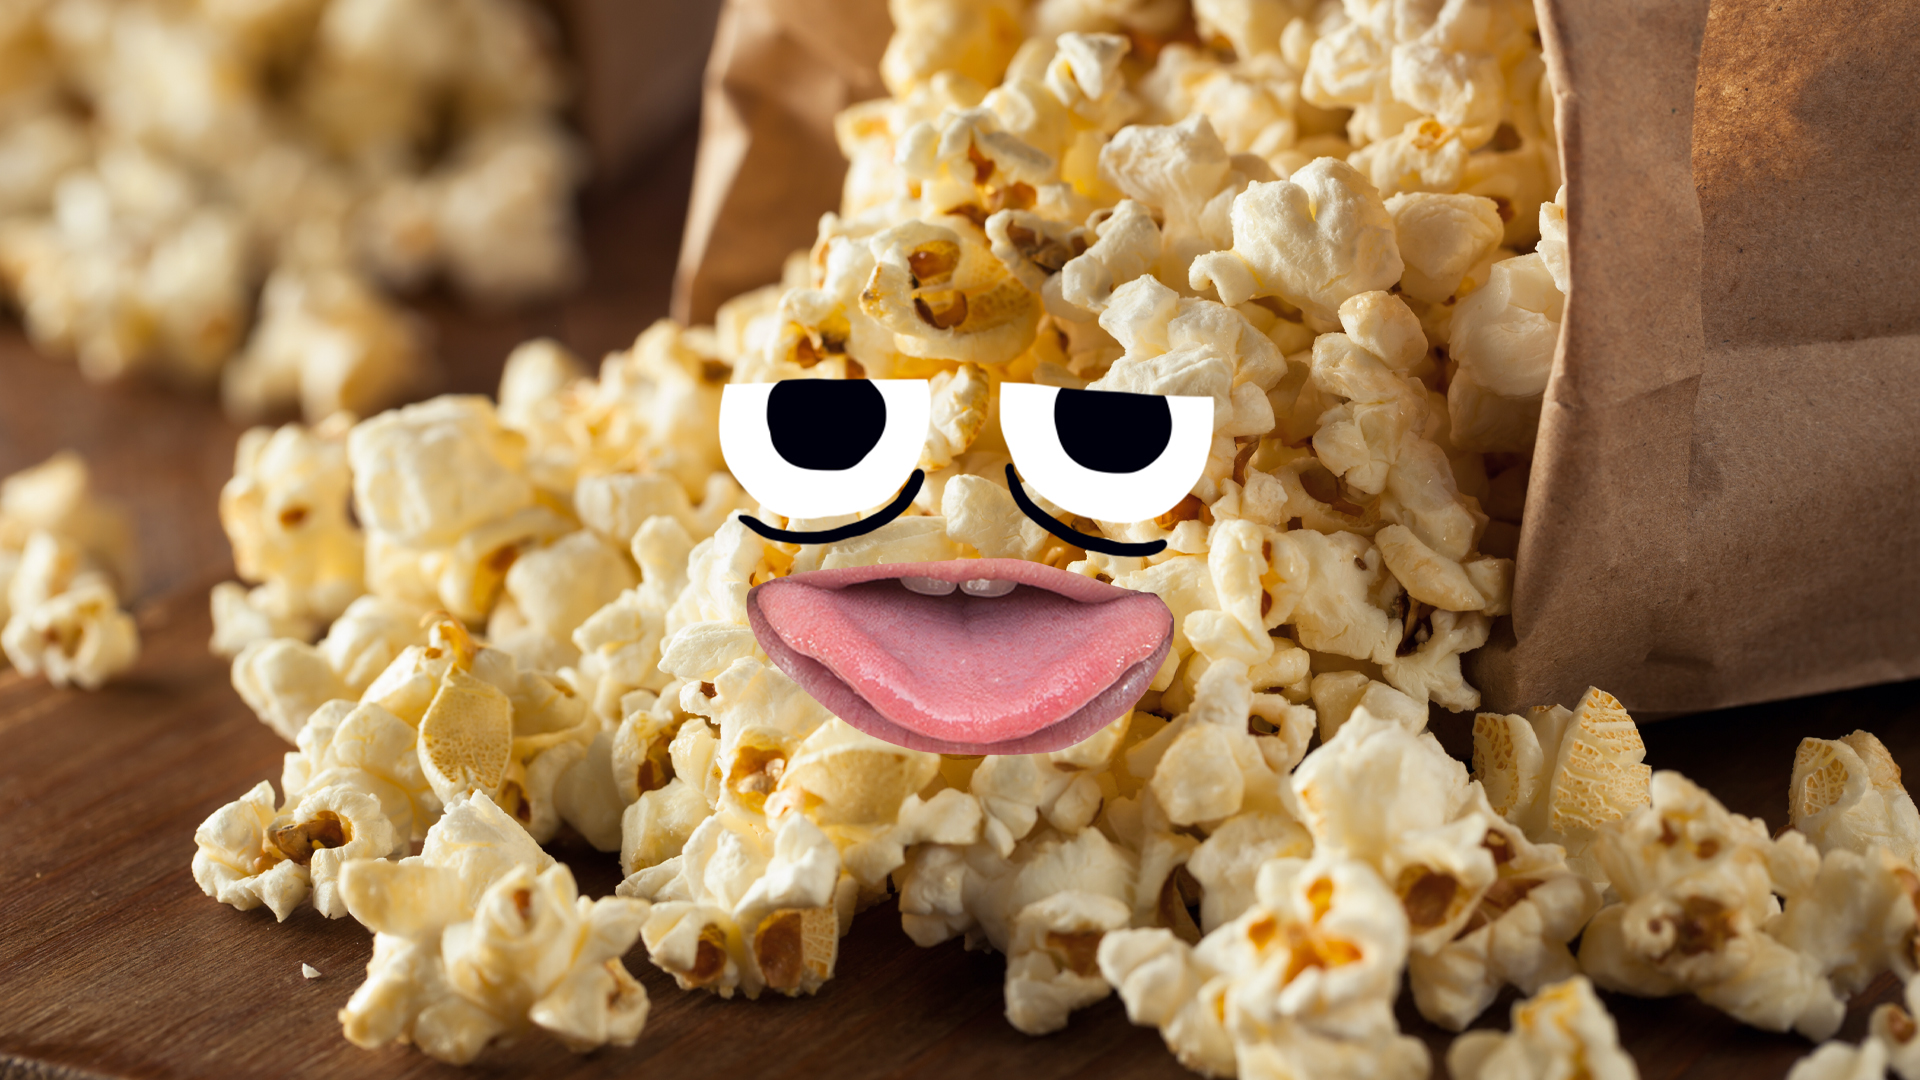 Some snoozy looking popcorn